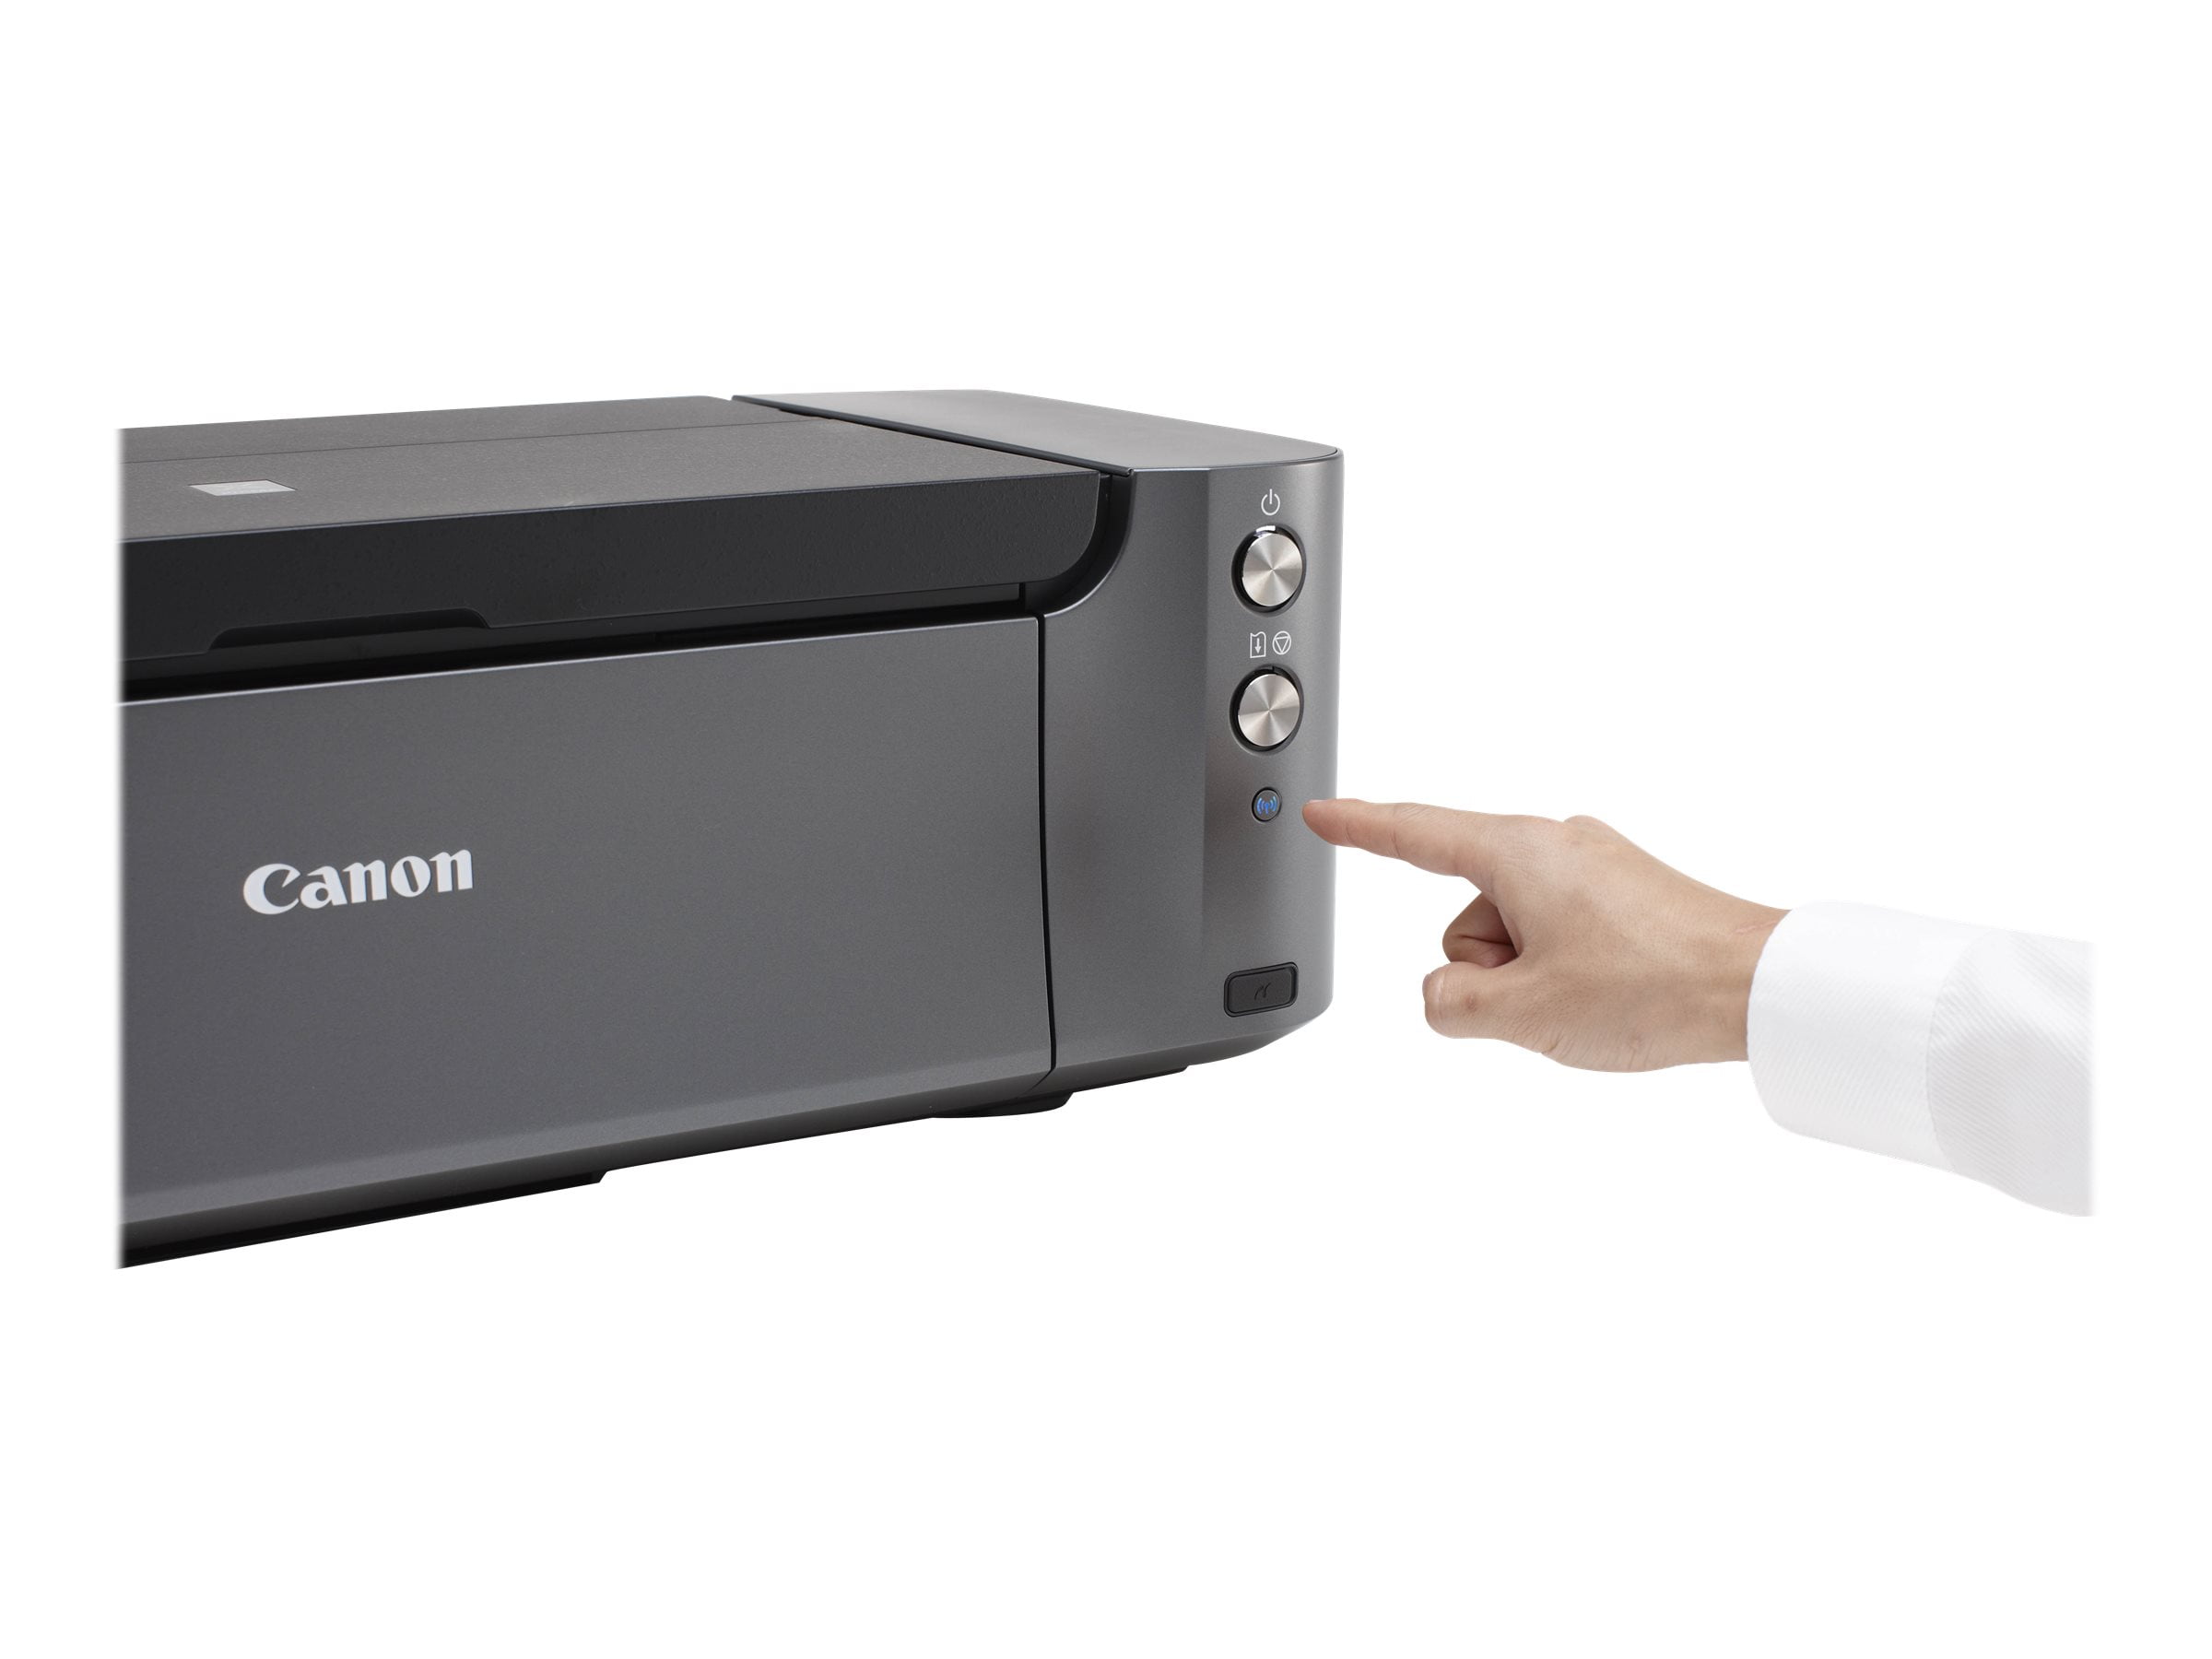 Ønske Admin sweater Canon PIXMA PRO-10 - Printer - color - ink-jet - Super B - 4800 x 2400 dpi  up to 3.6 min/page (color) - capacity: 150 sheets - USB, LAN, Wi-Fi(n), USB  host - with Canon InstantExchange - Walmart.com